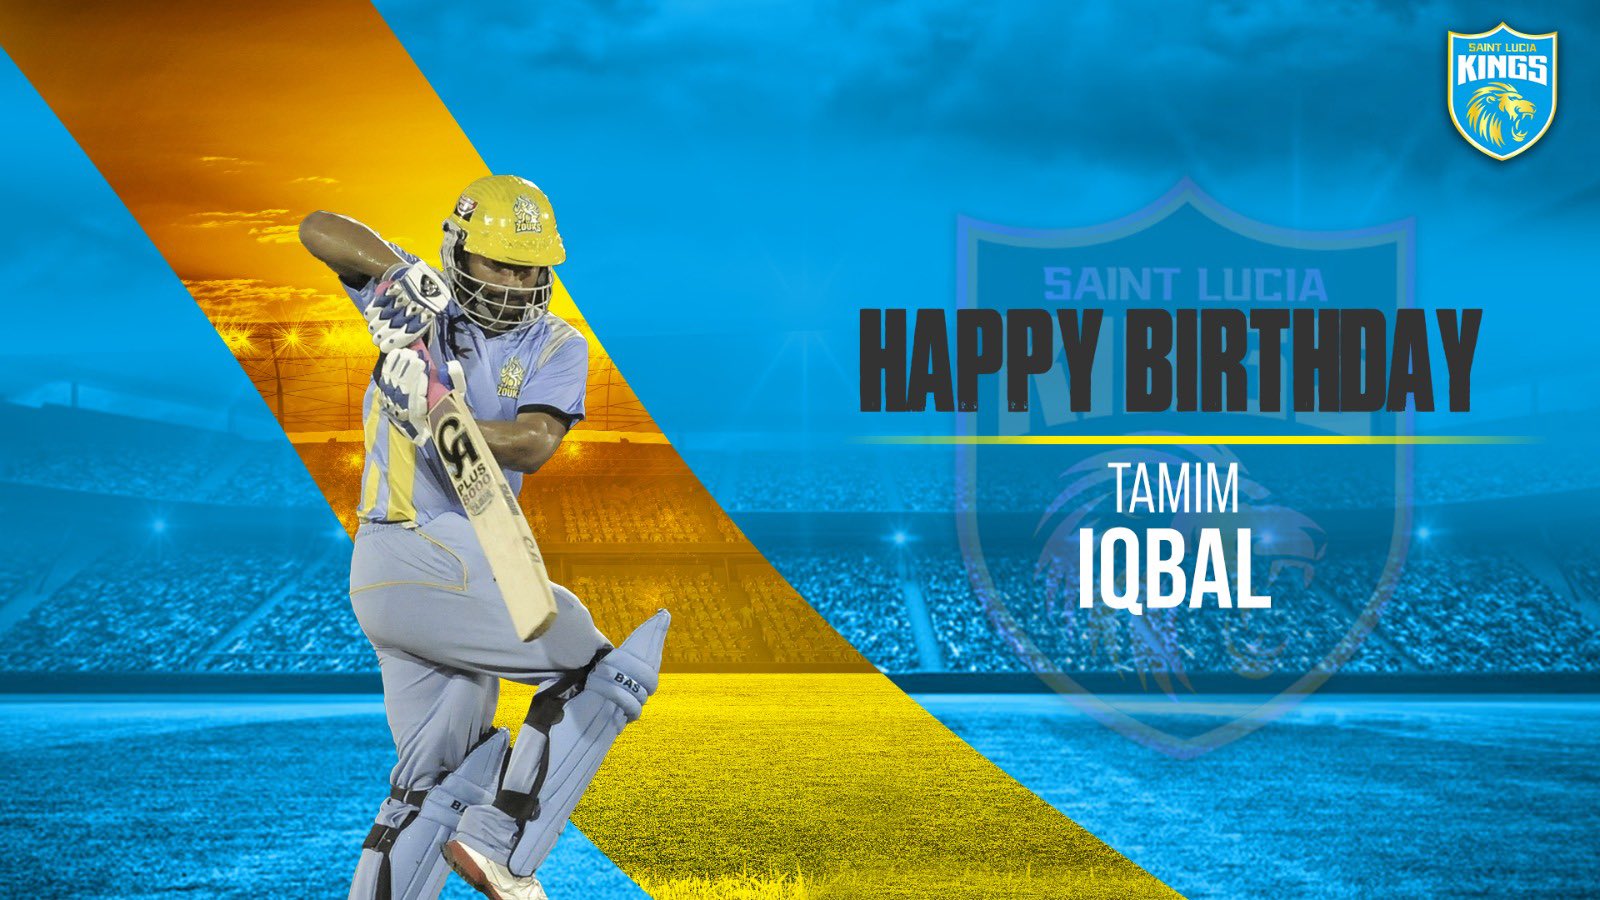 Sending happy birthday wishes to Tamim Iqbal.   